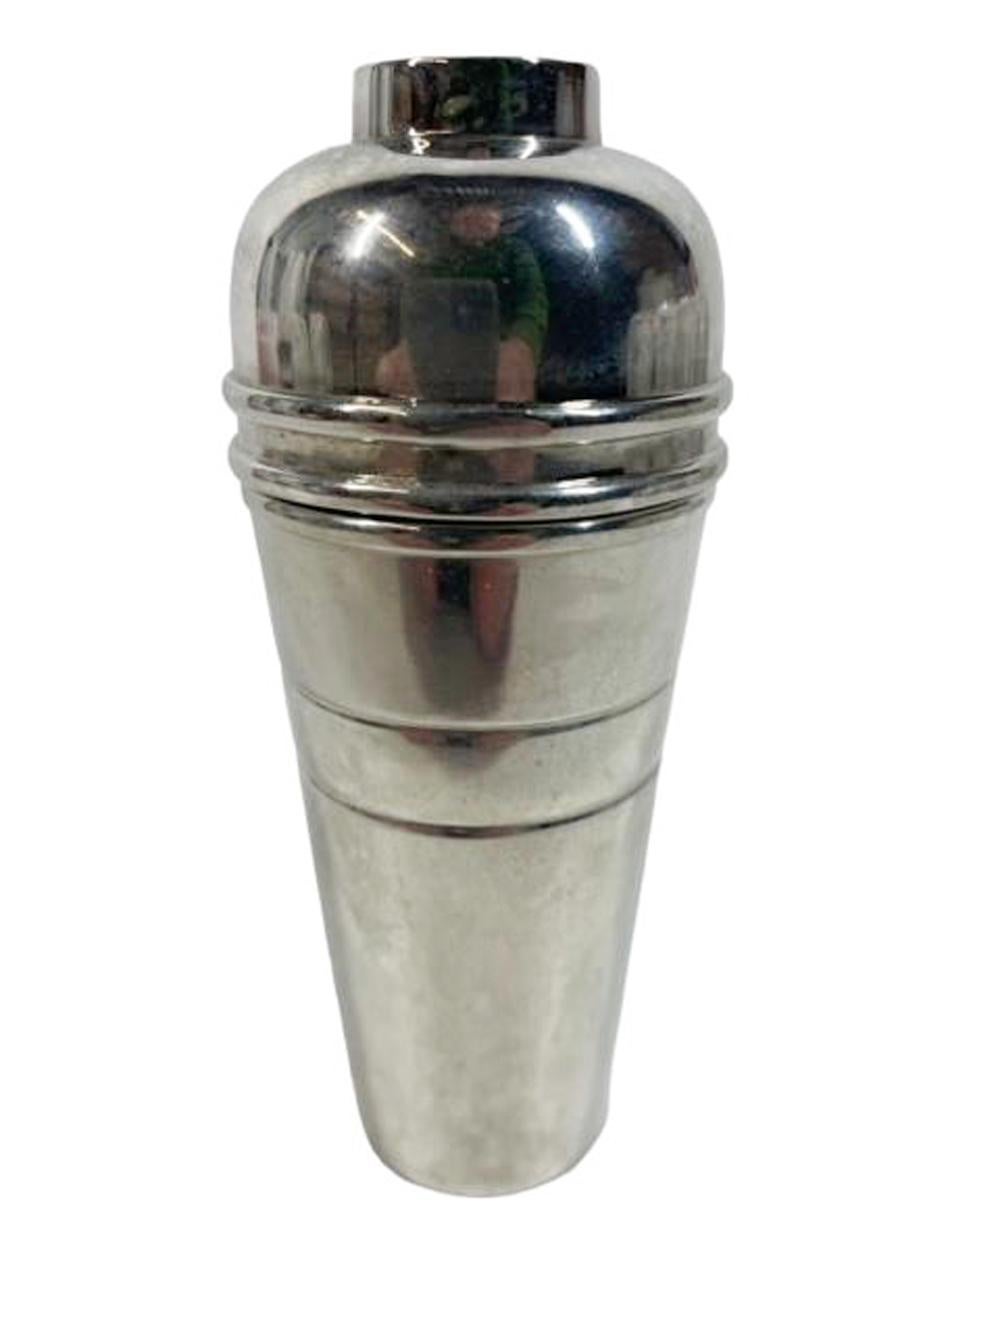 Art déco A Silver Silver Plate Cocktail Shaker Shaped Spirit Measure, Set of Picks Inside en vente